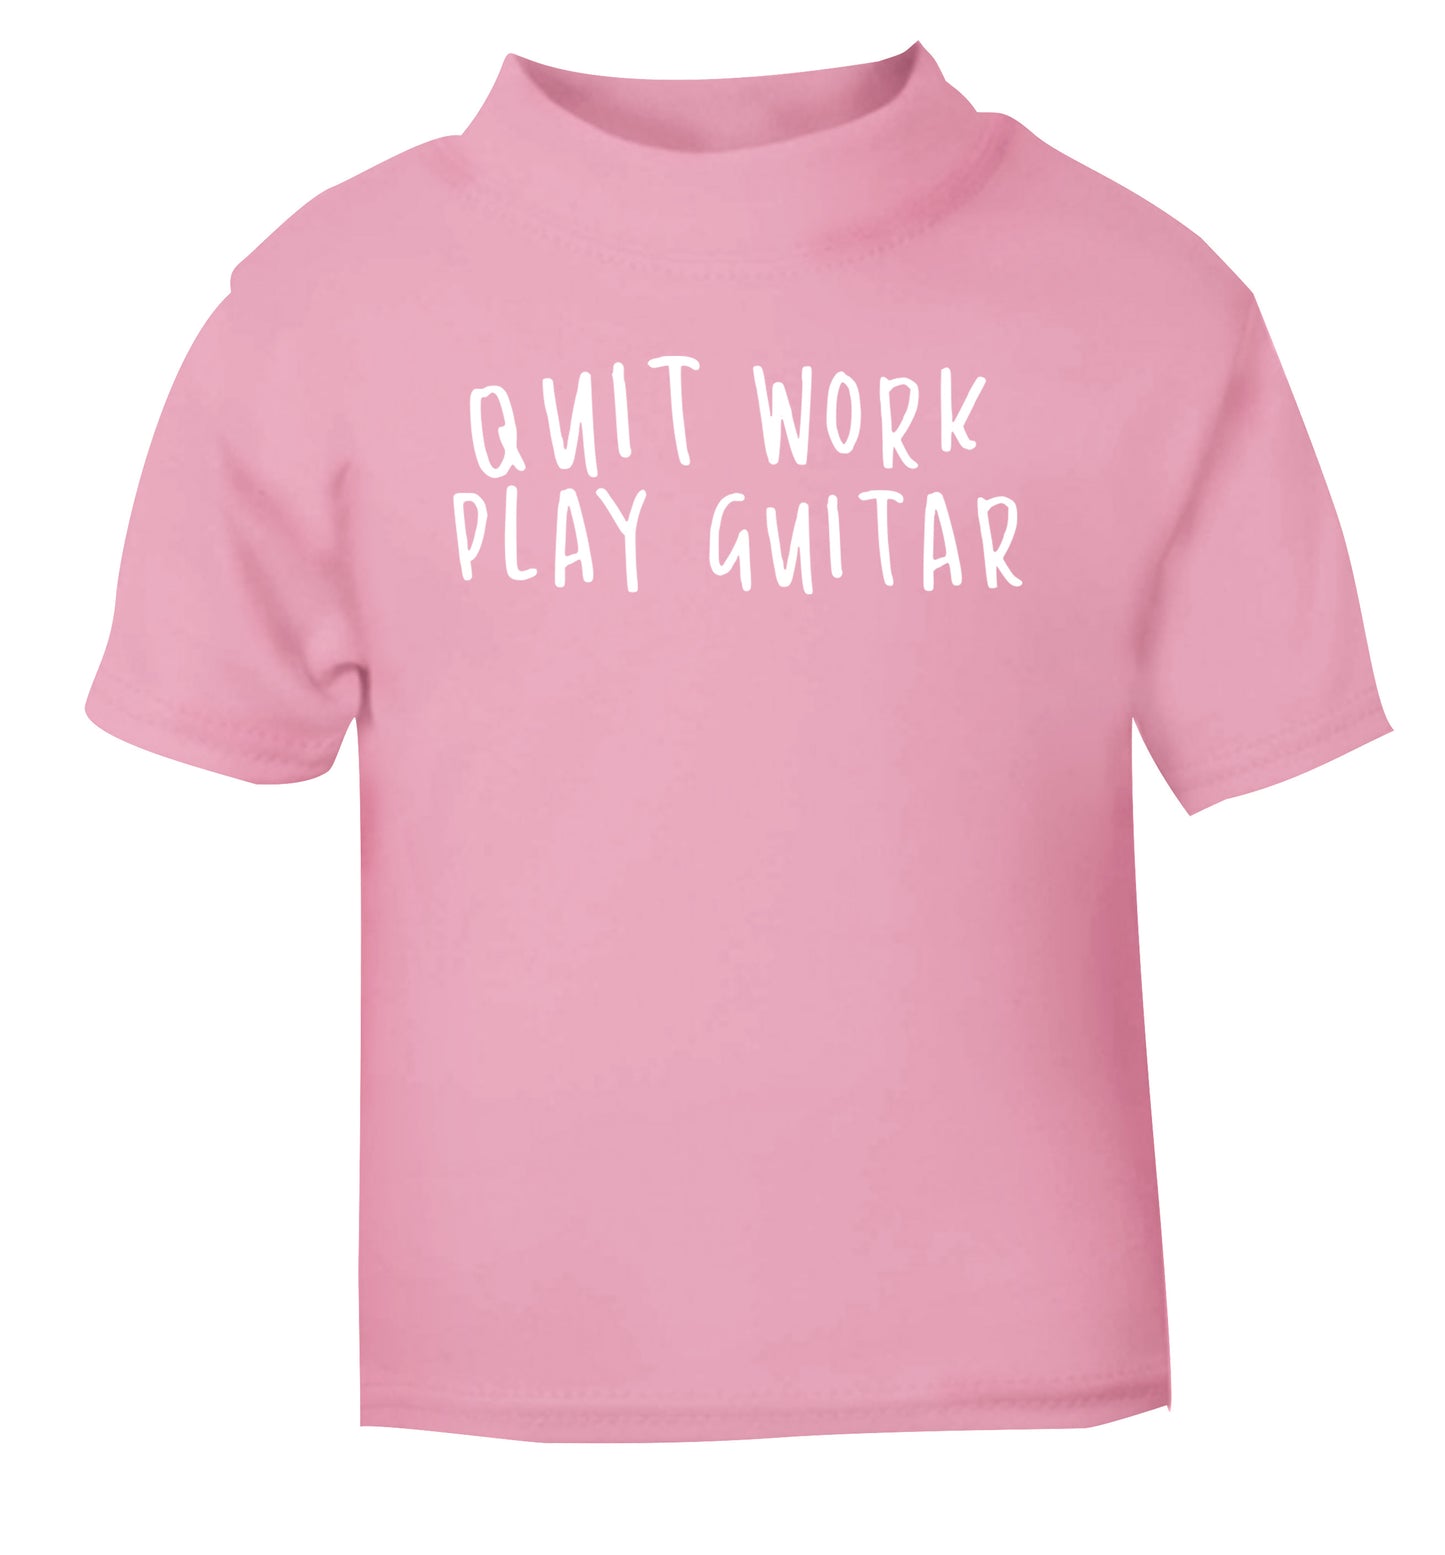 Quit work play guitar light pink Baby Toddler Tshirt 2 Years